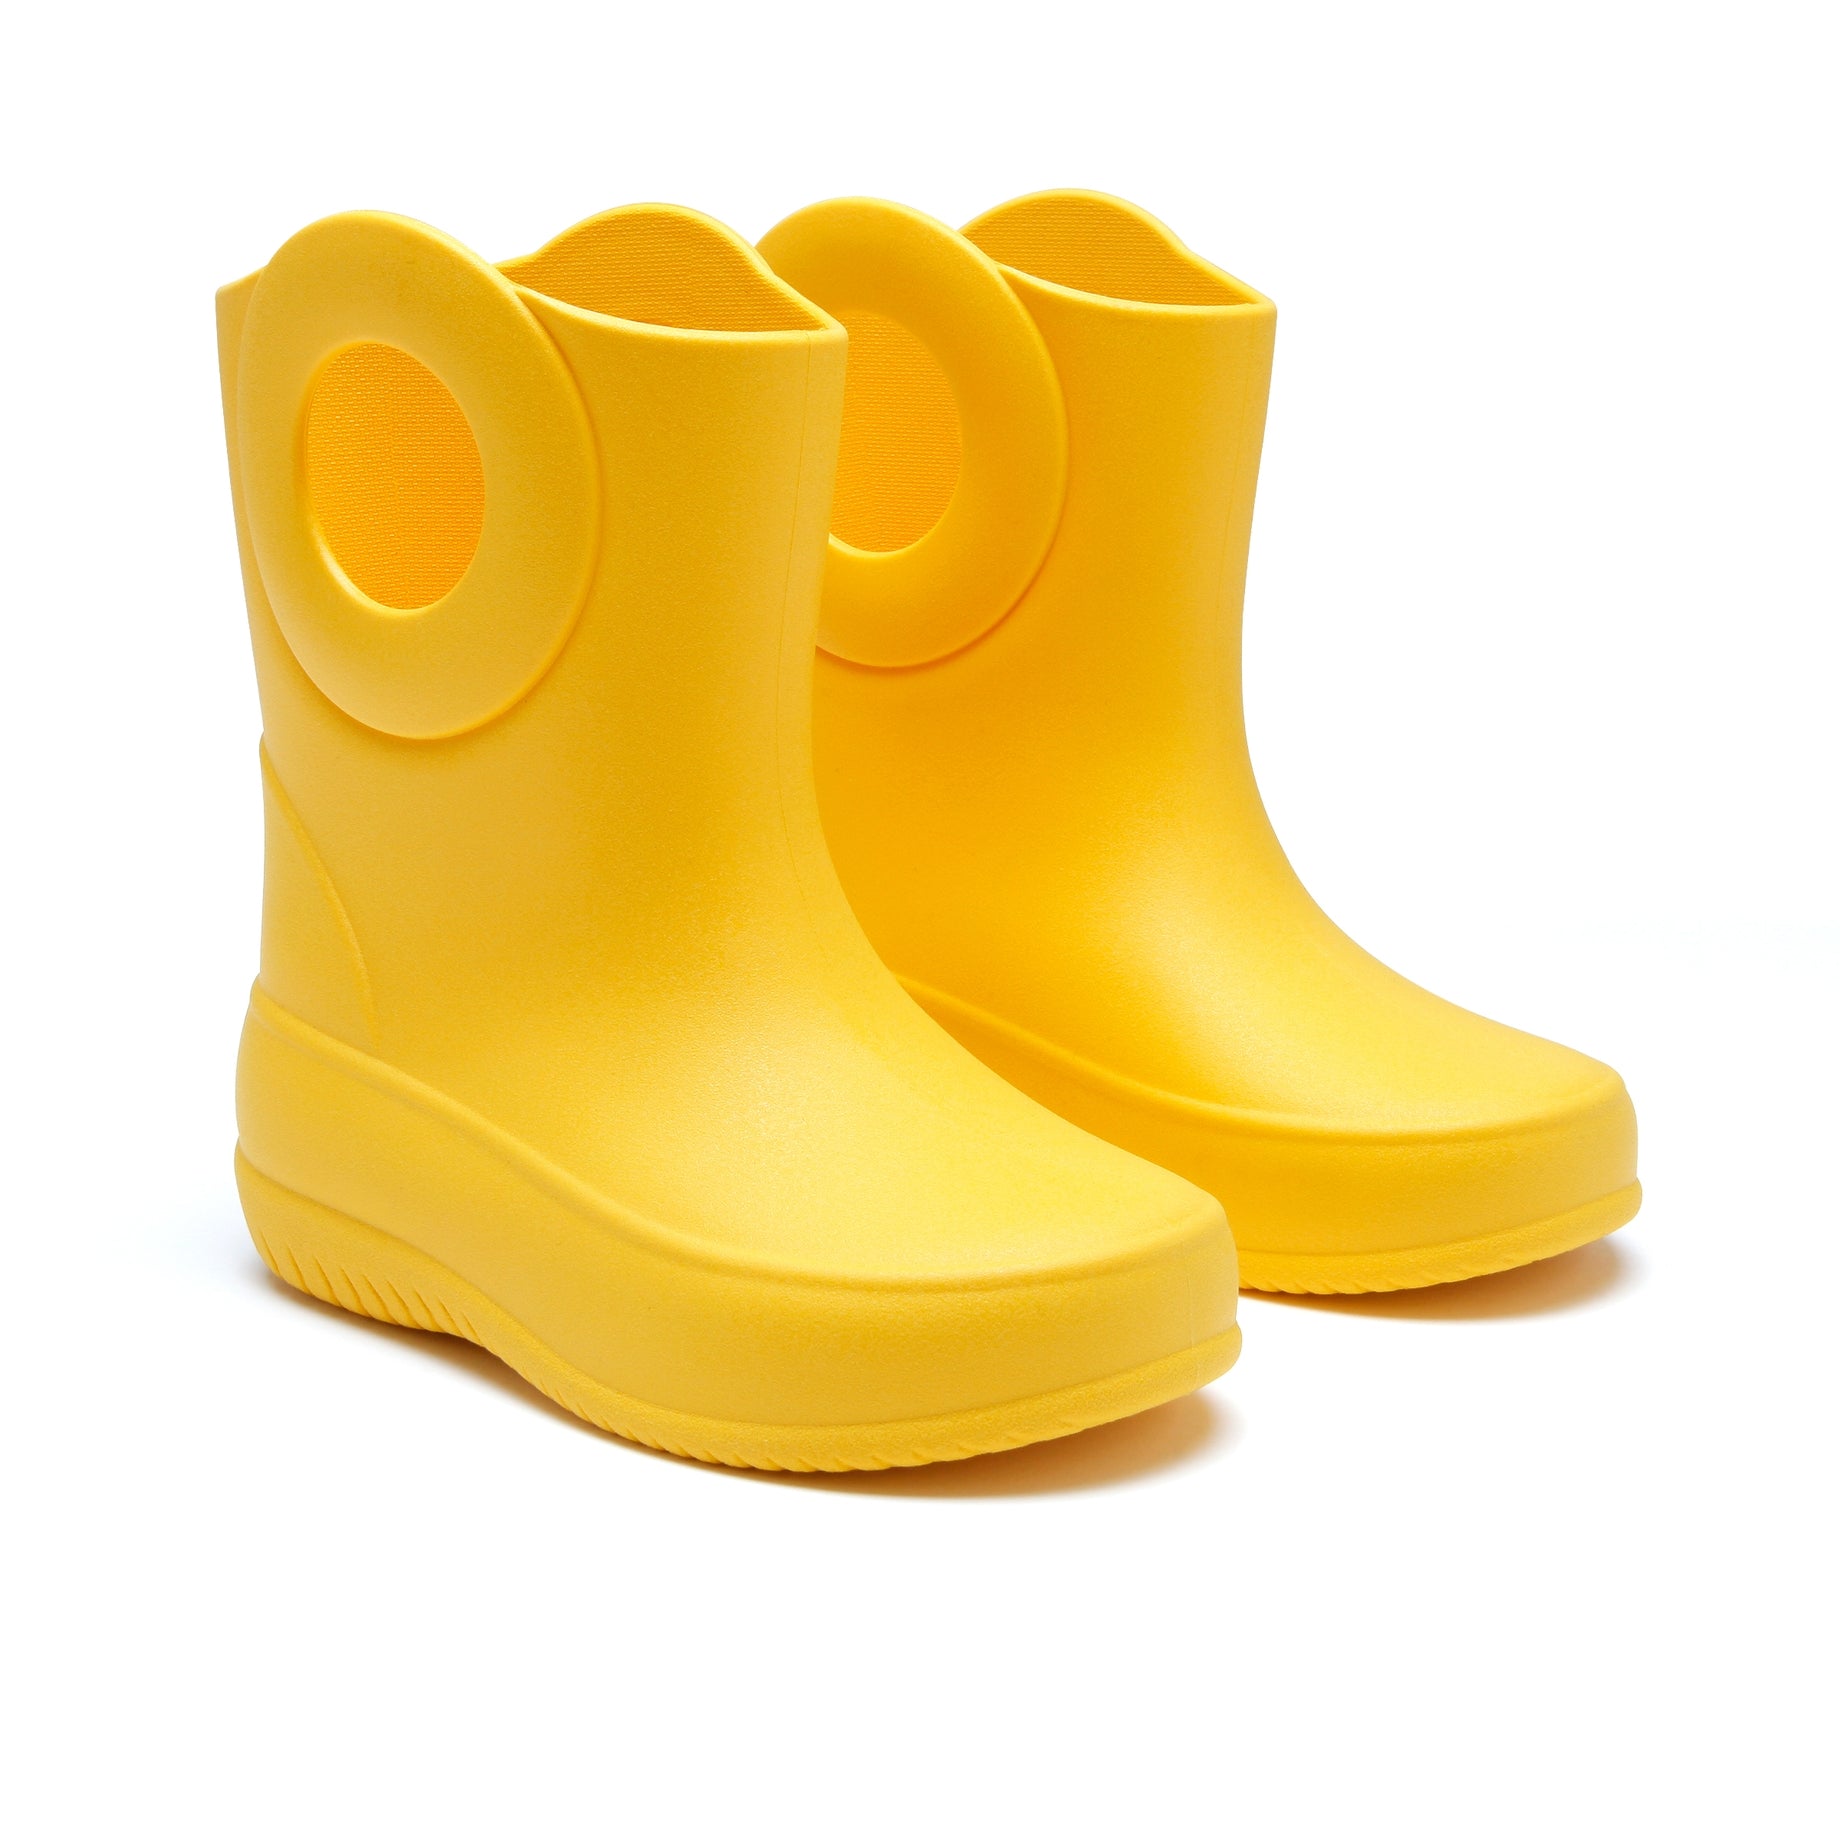 Toddler Rain Boot - Solid Yellow